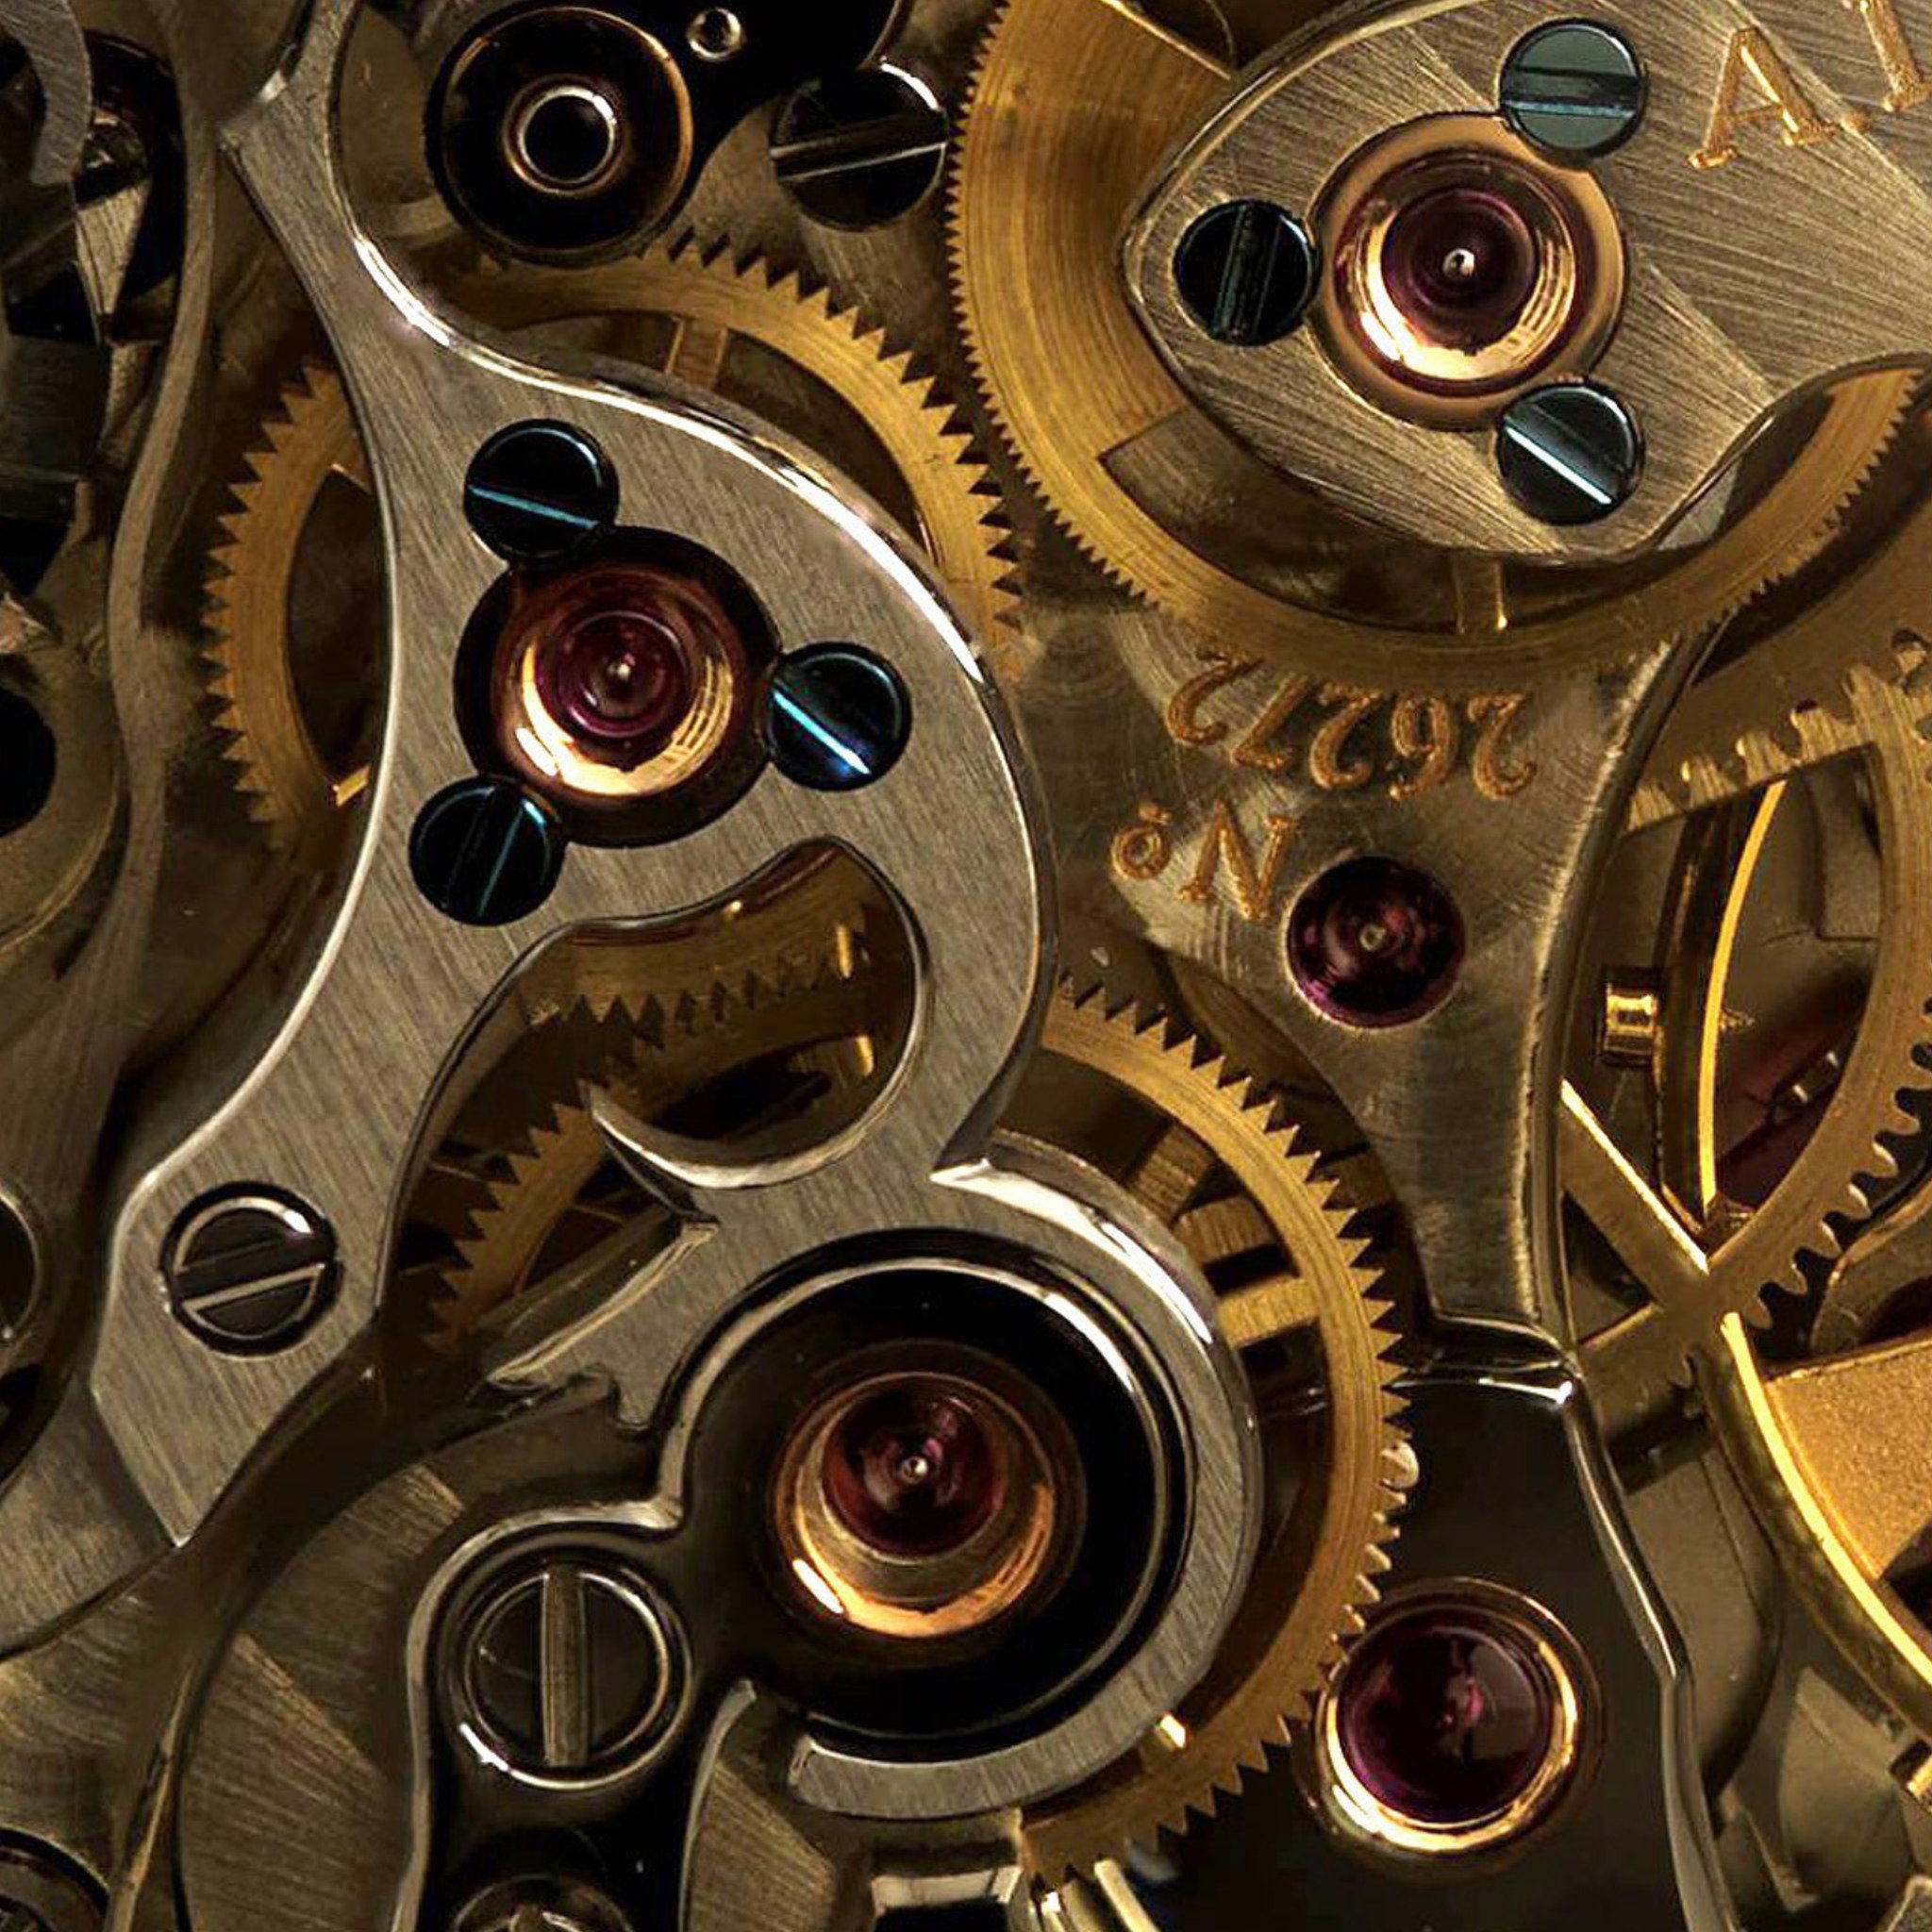  steampunk mechanism machine Engineering gear wallpaper 2048x2048 2048x2048